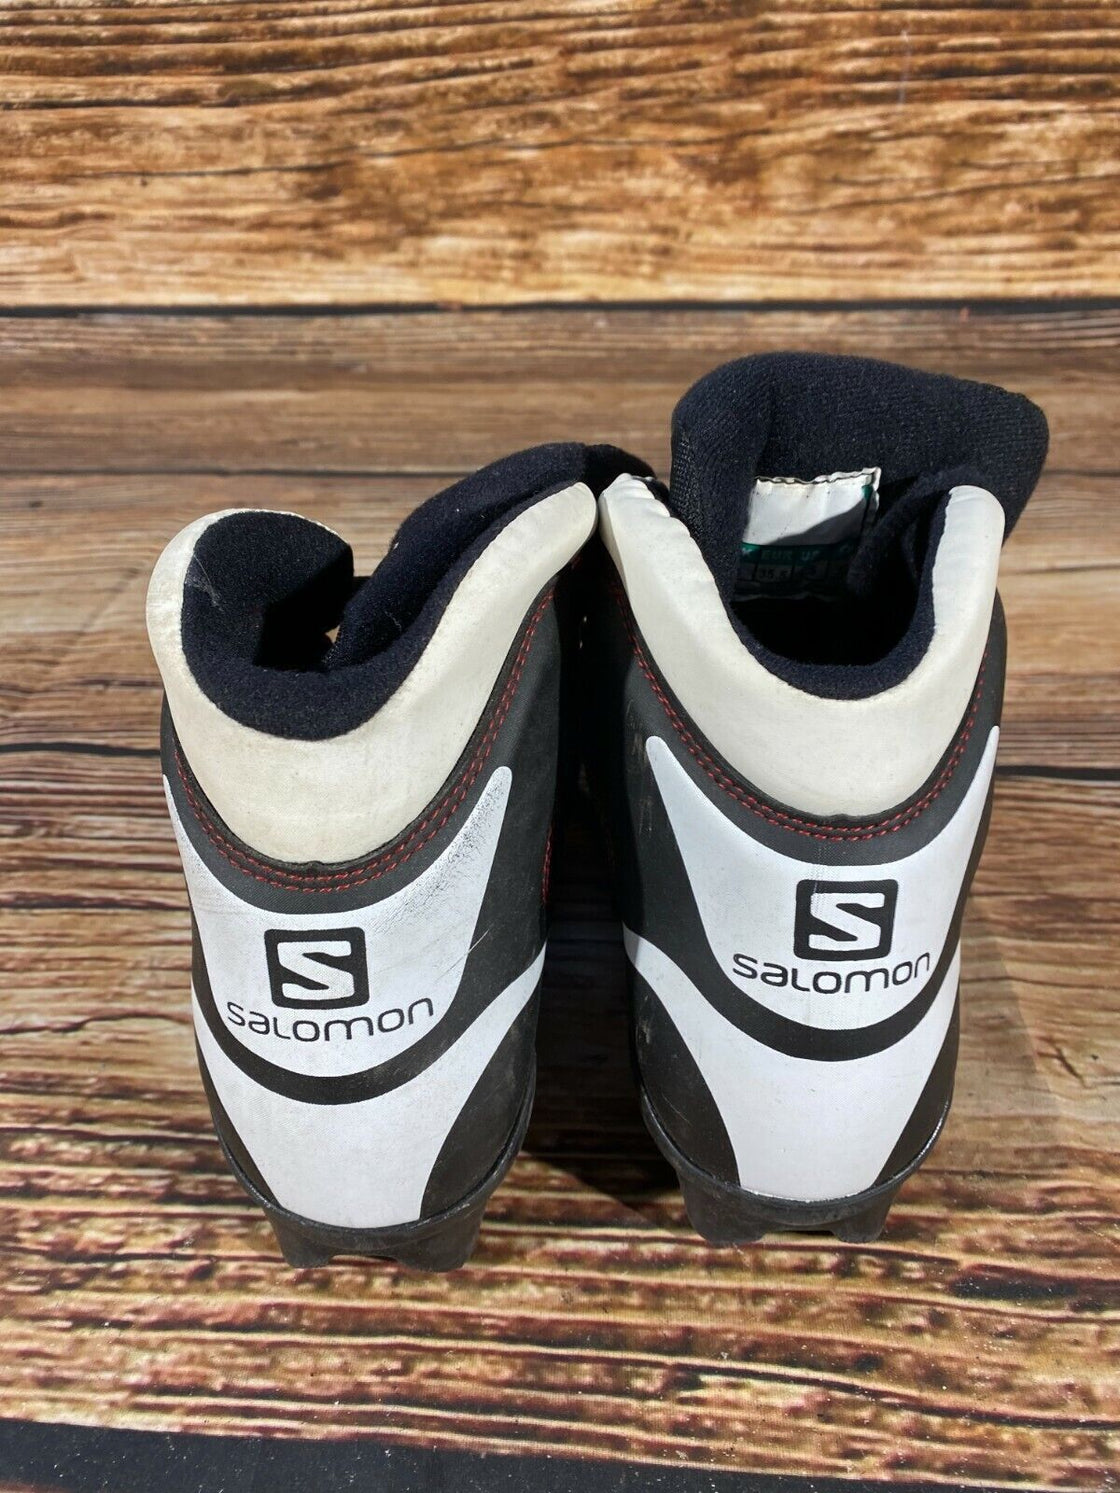 SALOMON Team Kids Nordic Cross Country Ski Boots Size EU35.5 US3.5 SNS profile